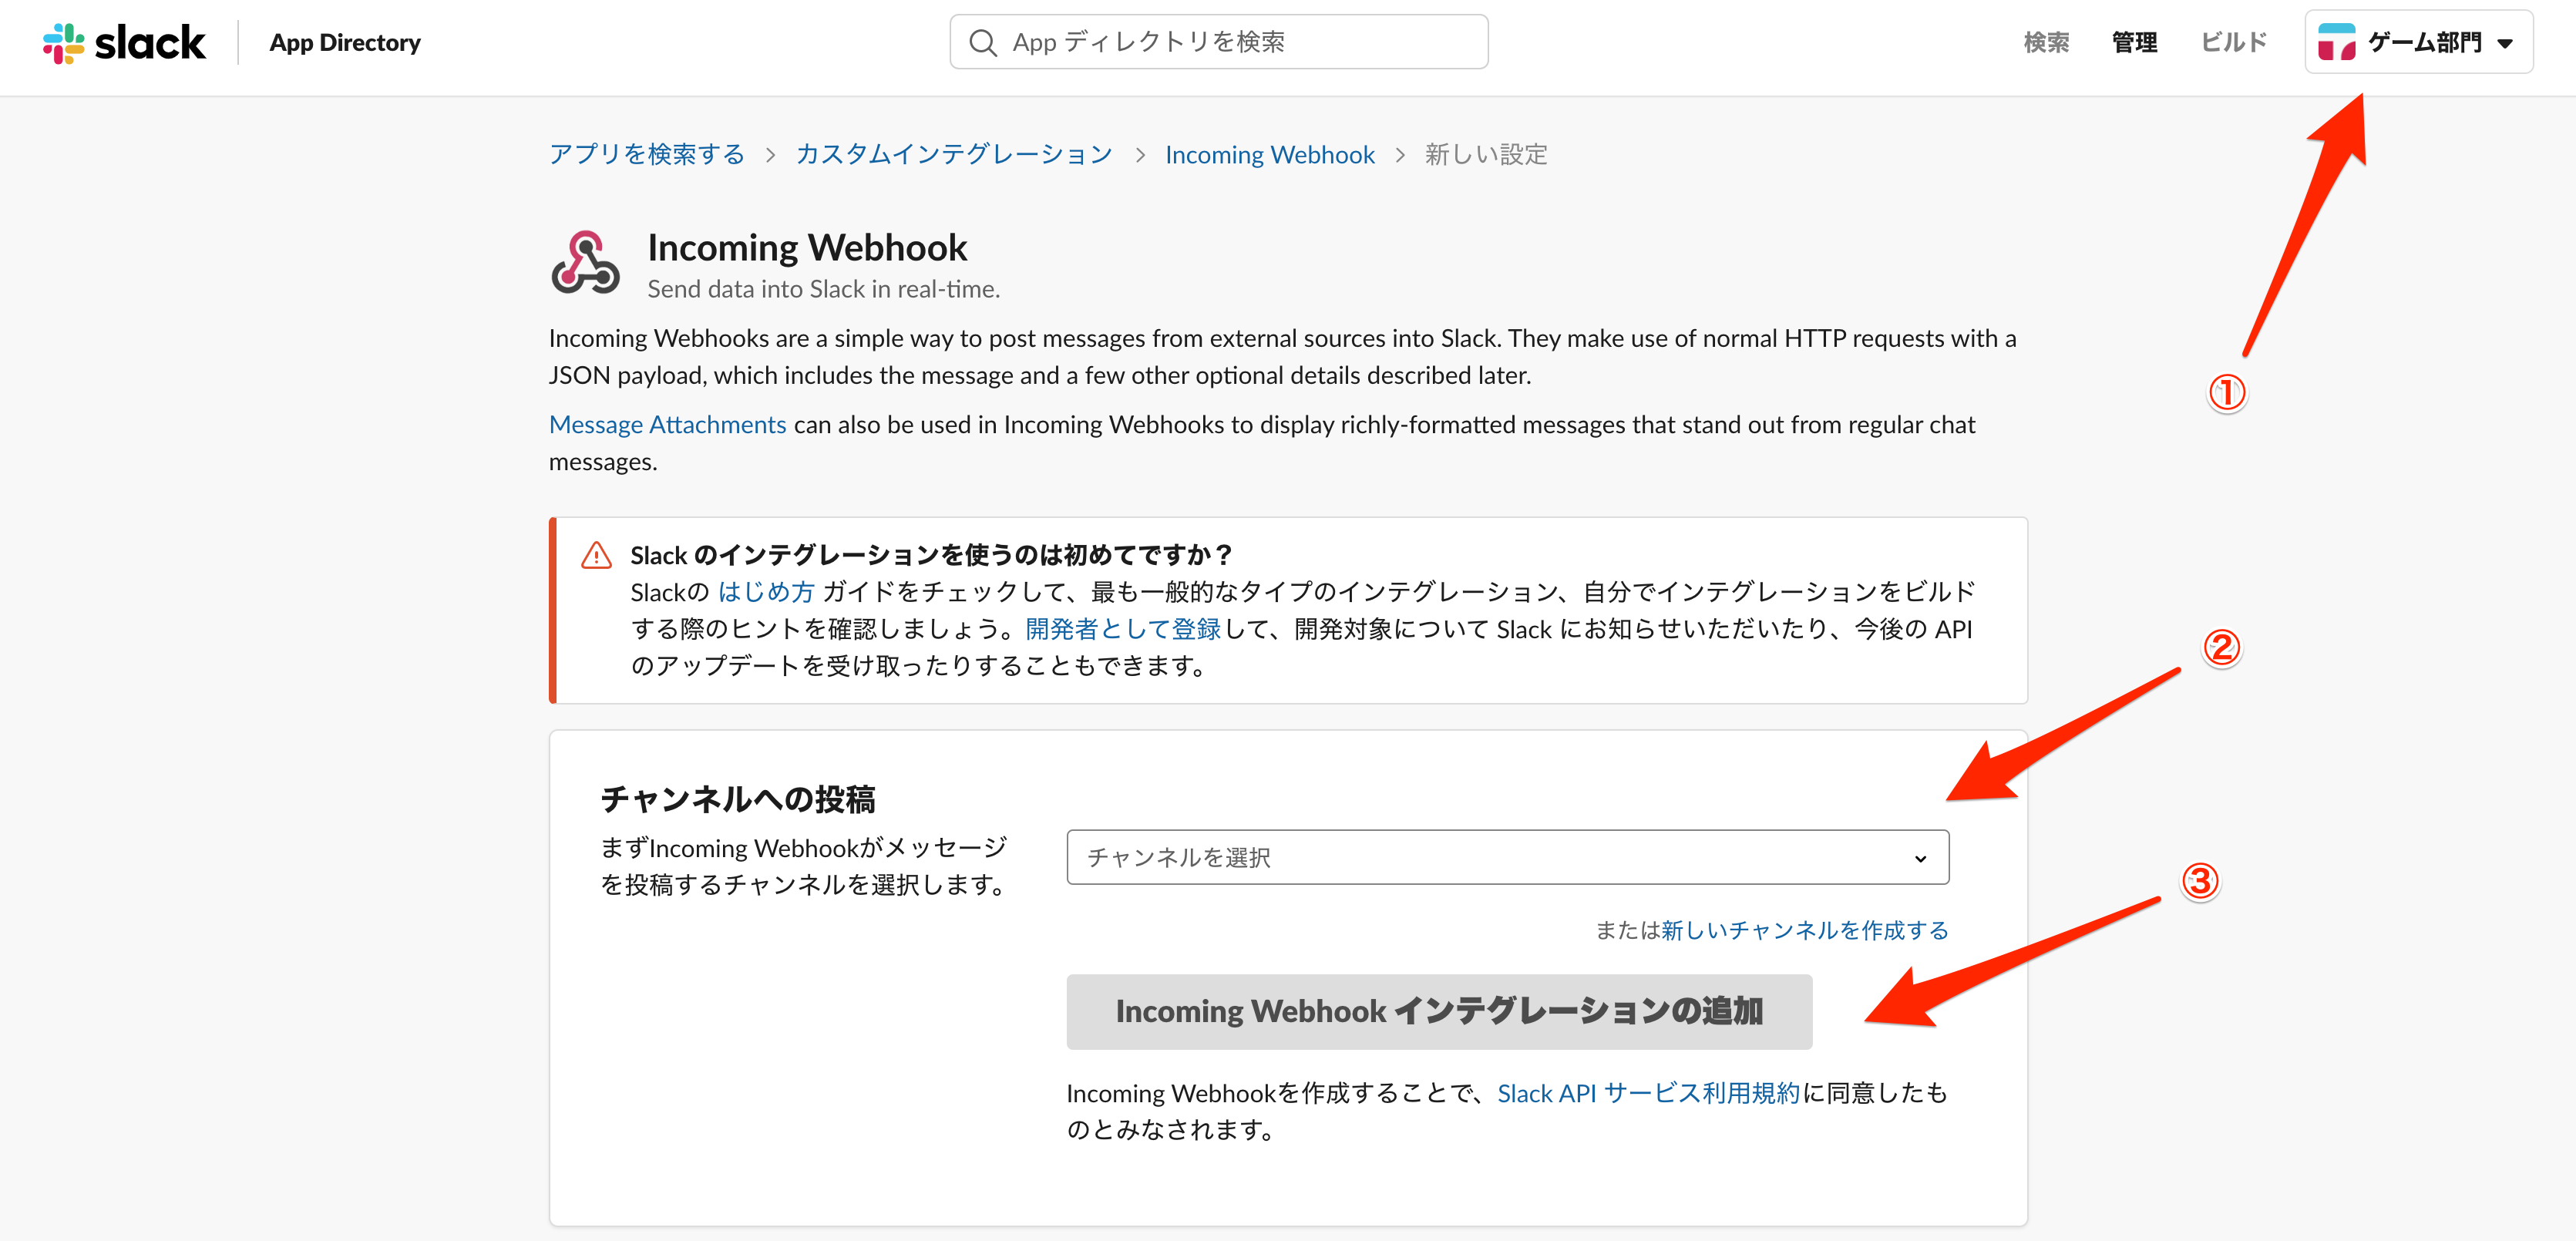 Incoming_Webhook___ゲーム部門_Slack.png